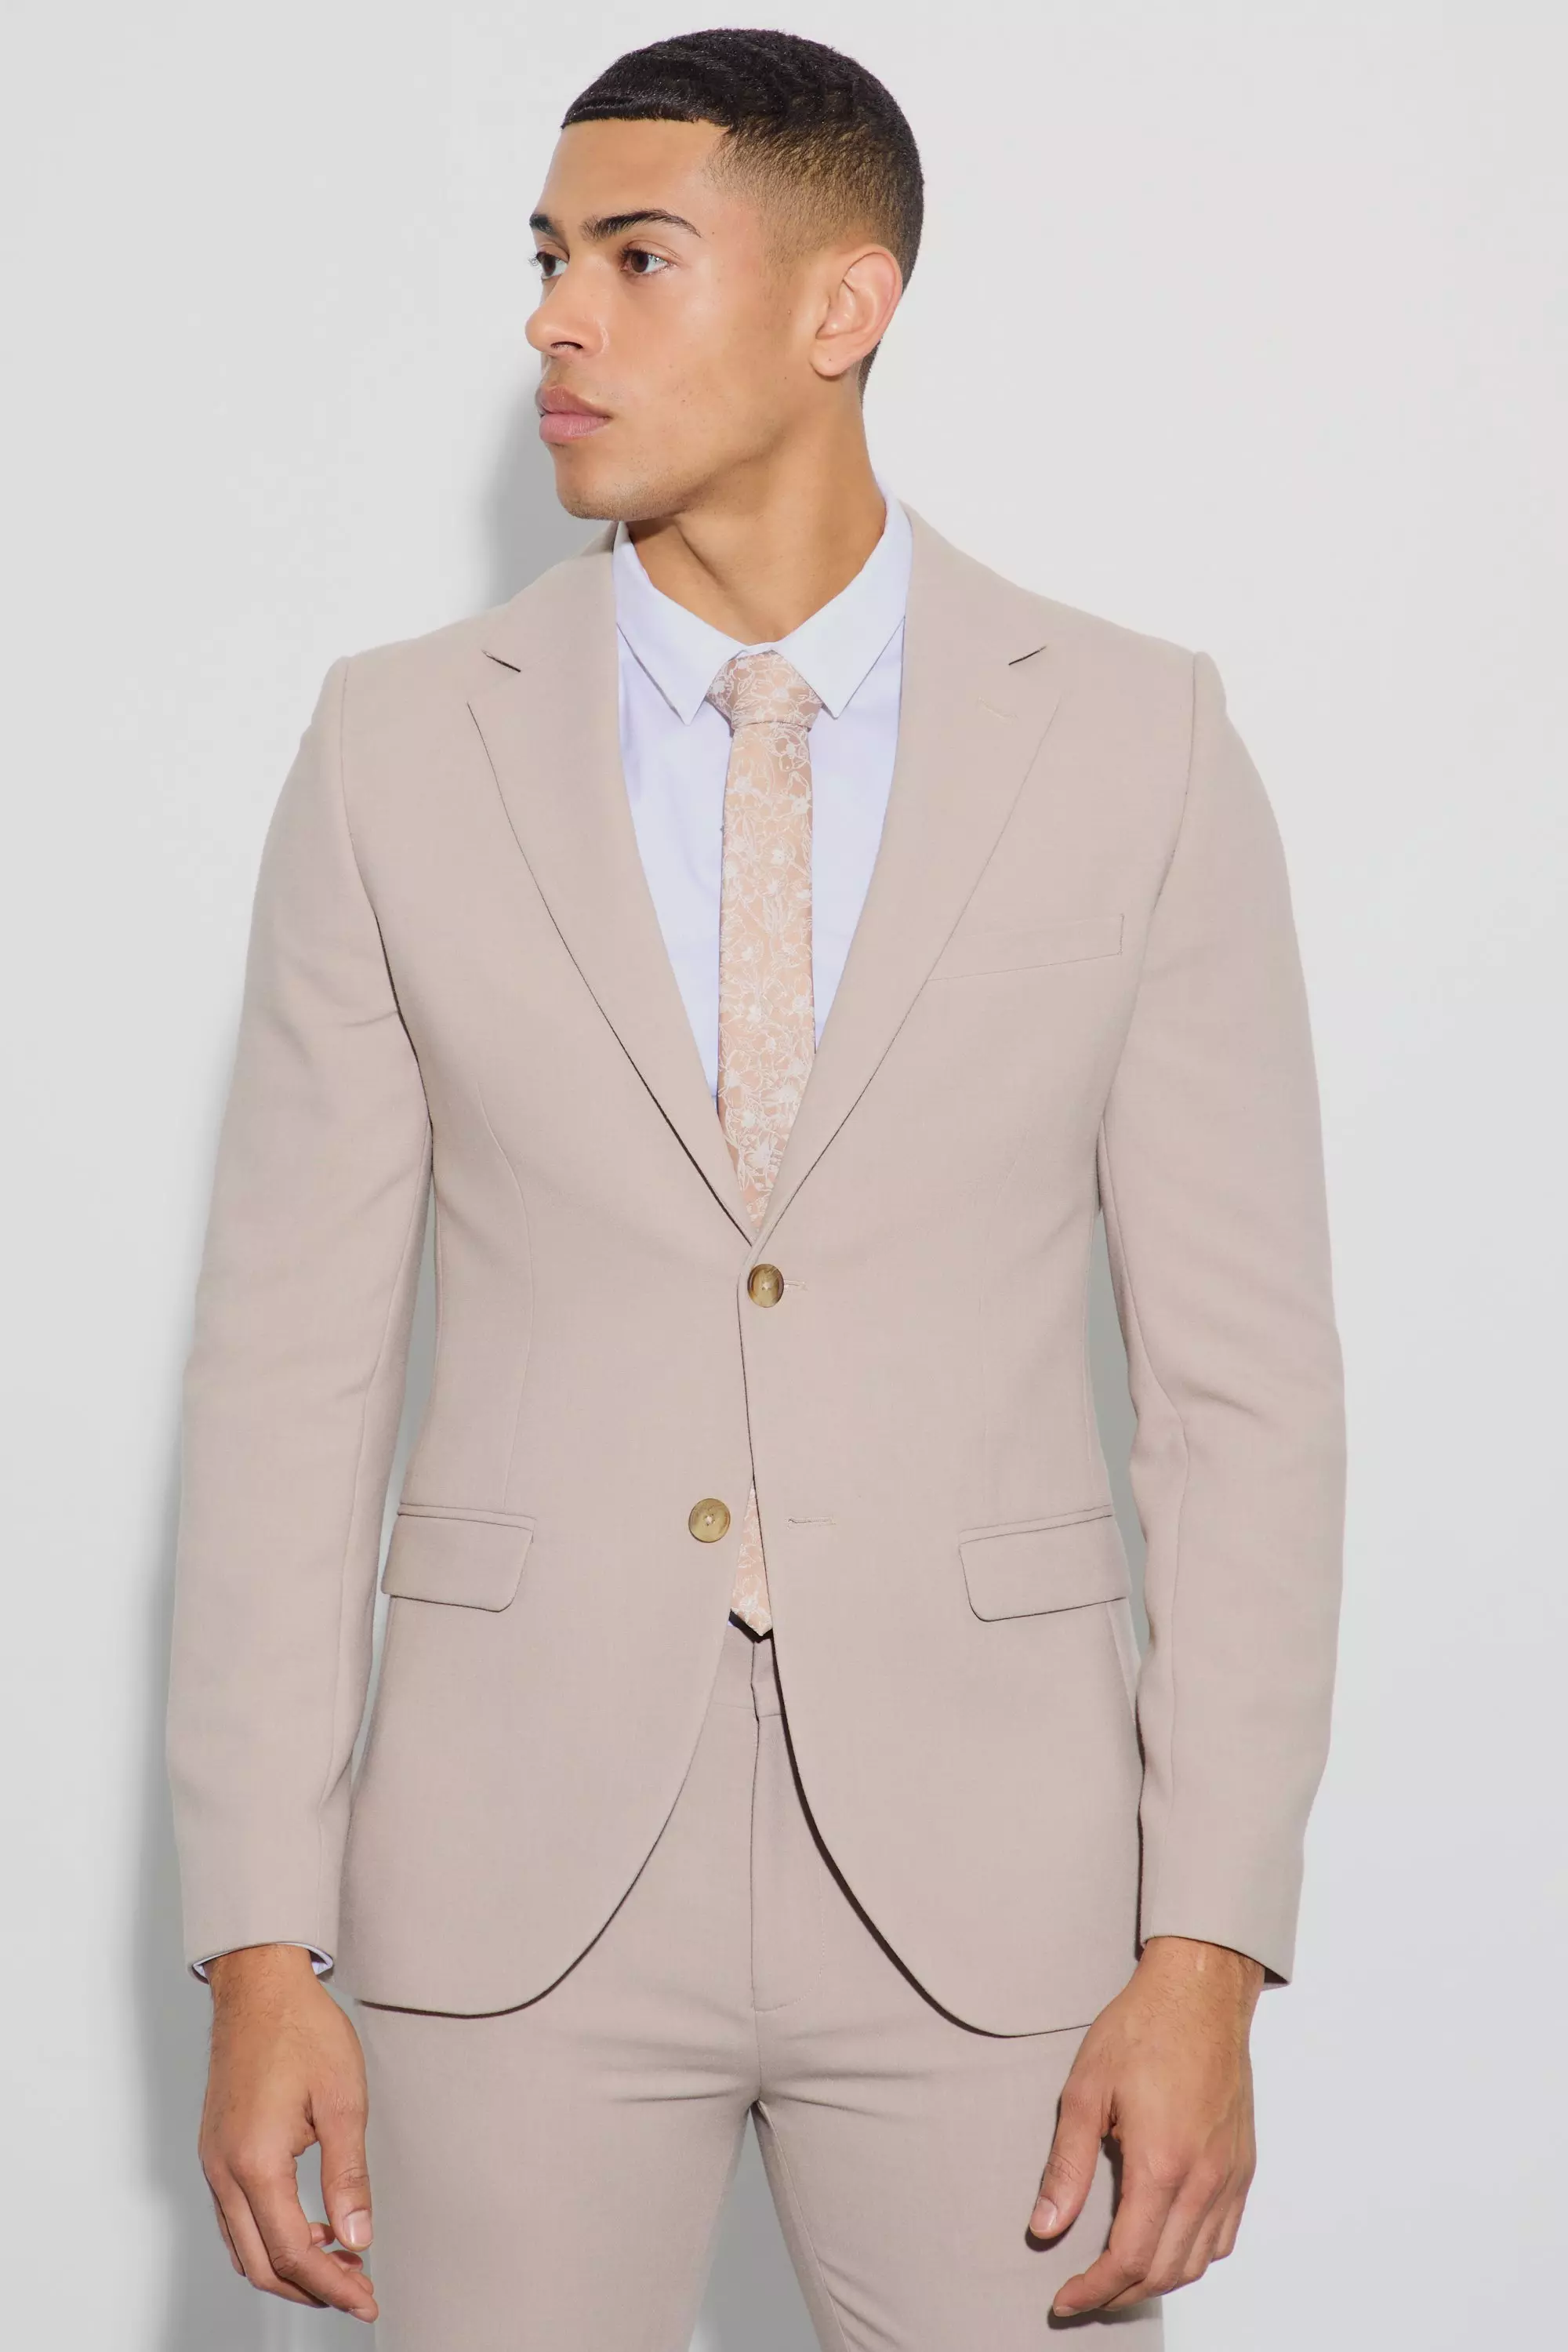 Jersey Skinny Single Breasted Suit Jacket Beige